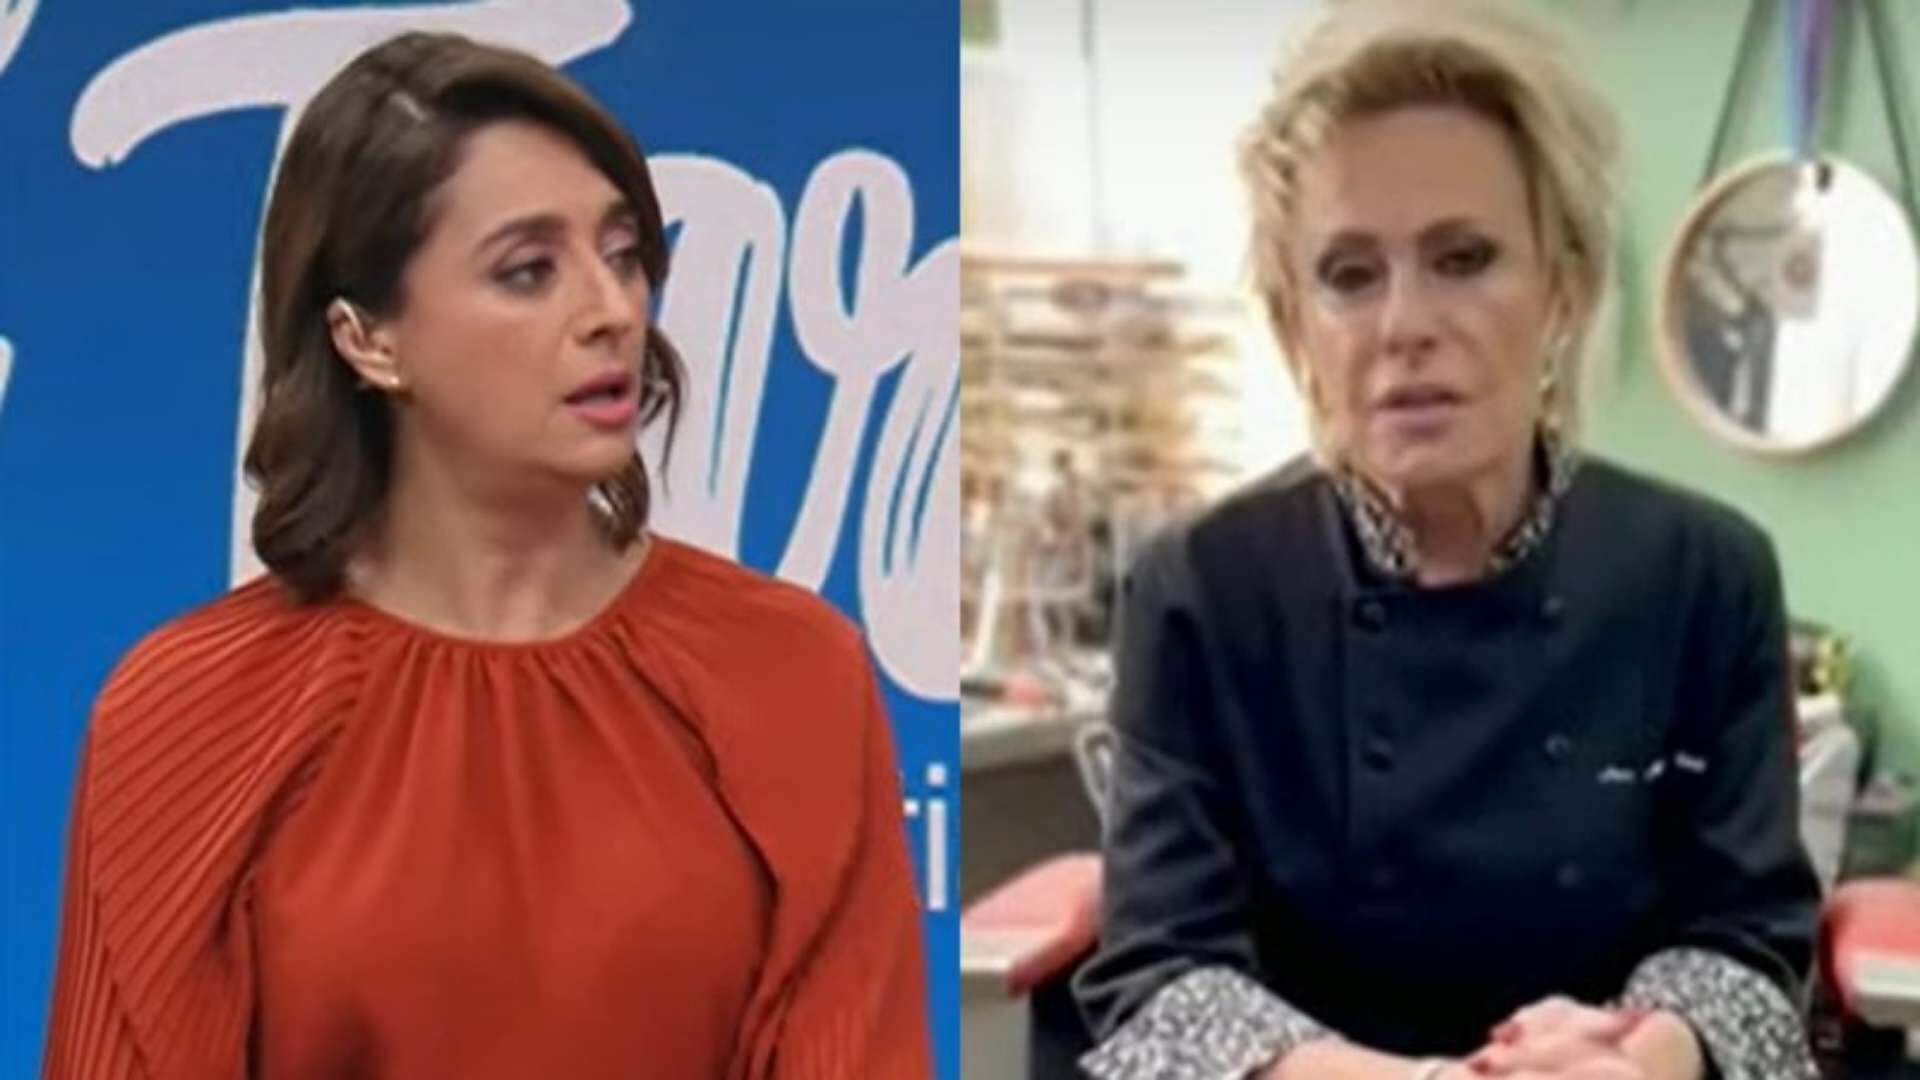 Catia Fonseca solta o verbo sobre pedido de desculpas de Ana Maria: “Responsabilidade dela” - Metropolitana FM